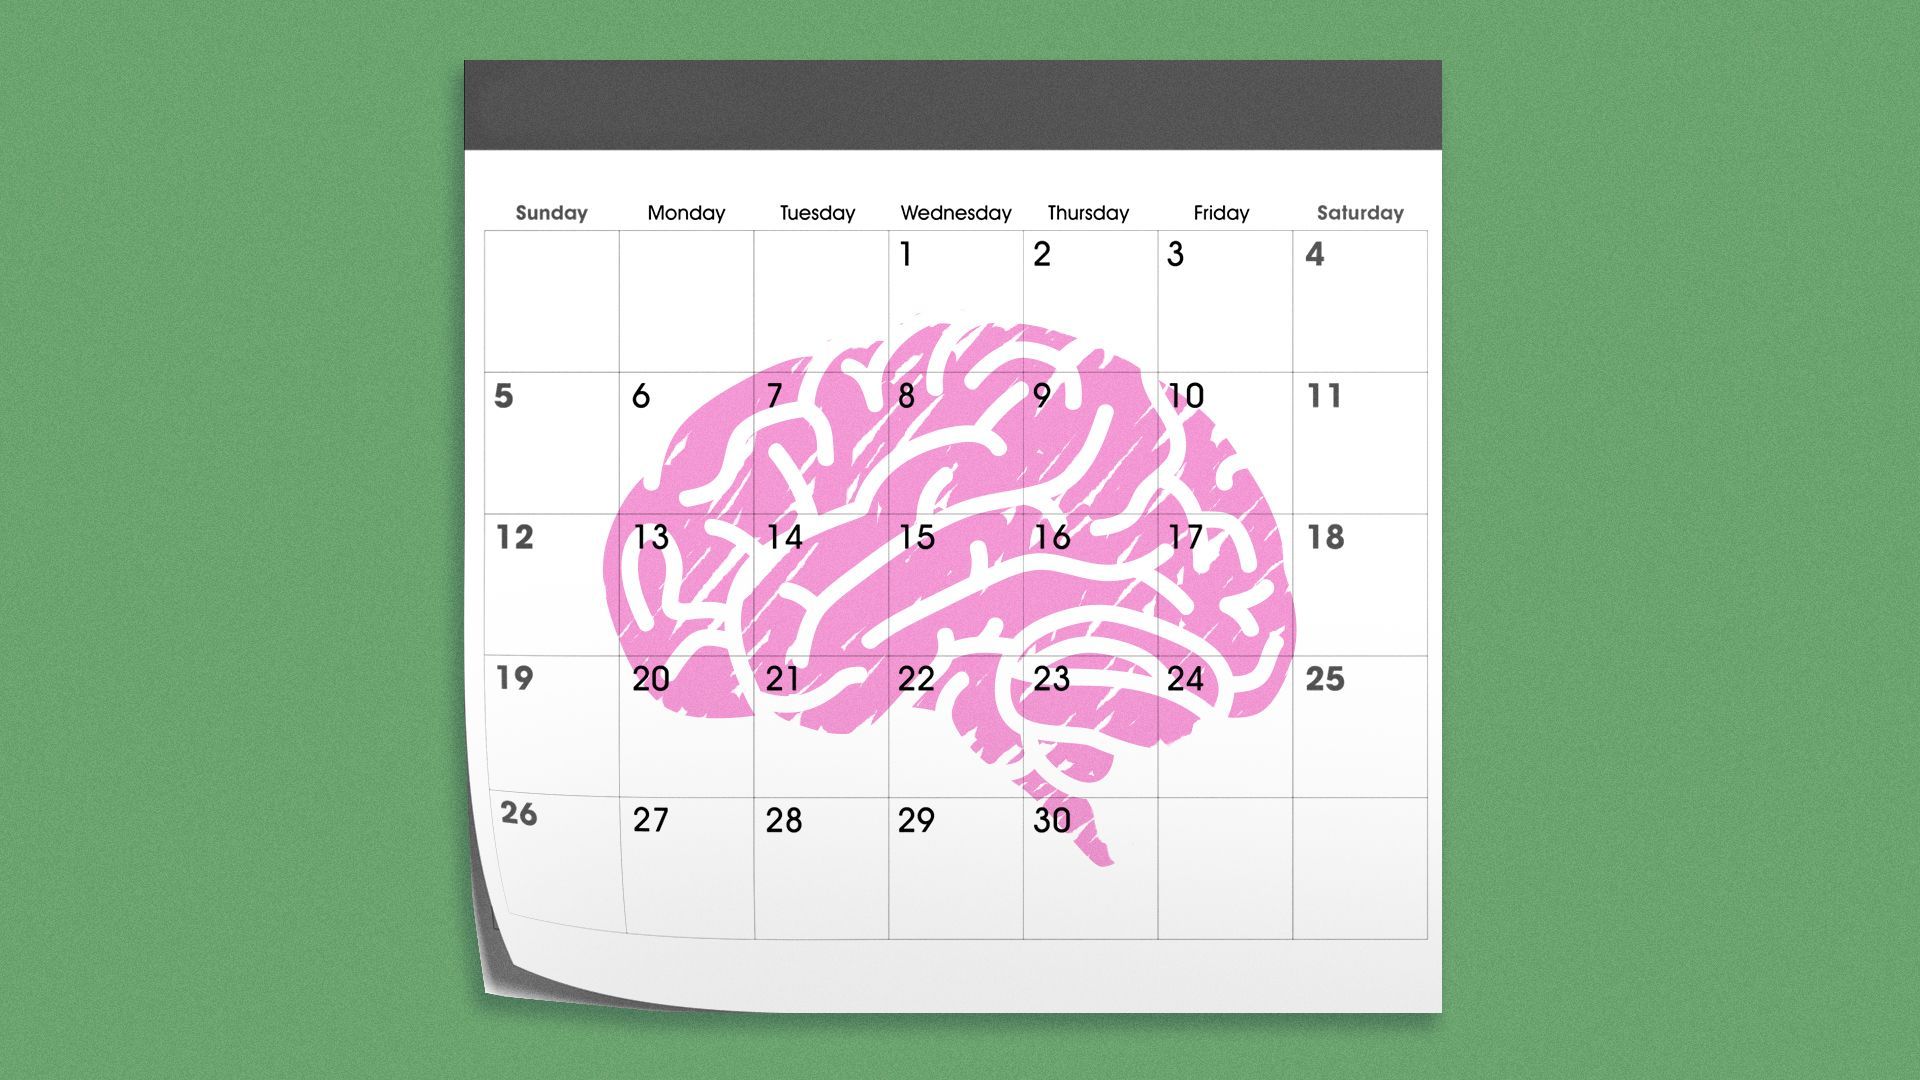 Illustration of a brain drawn on a calendar page.